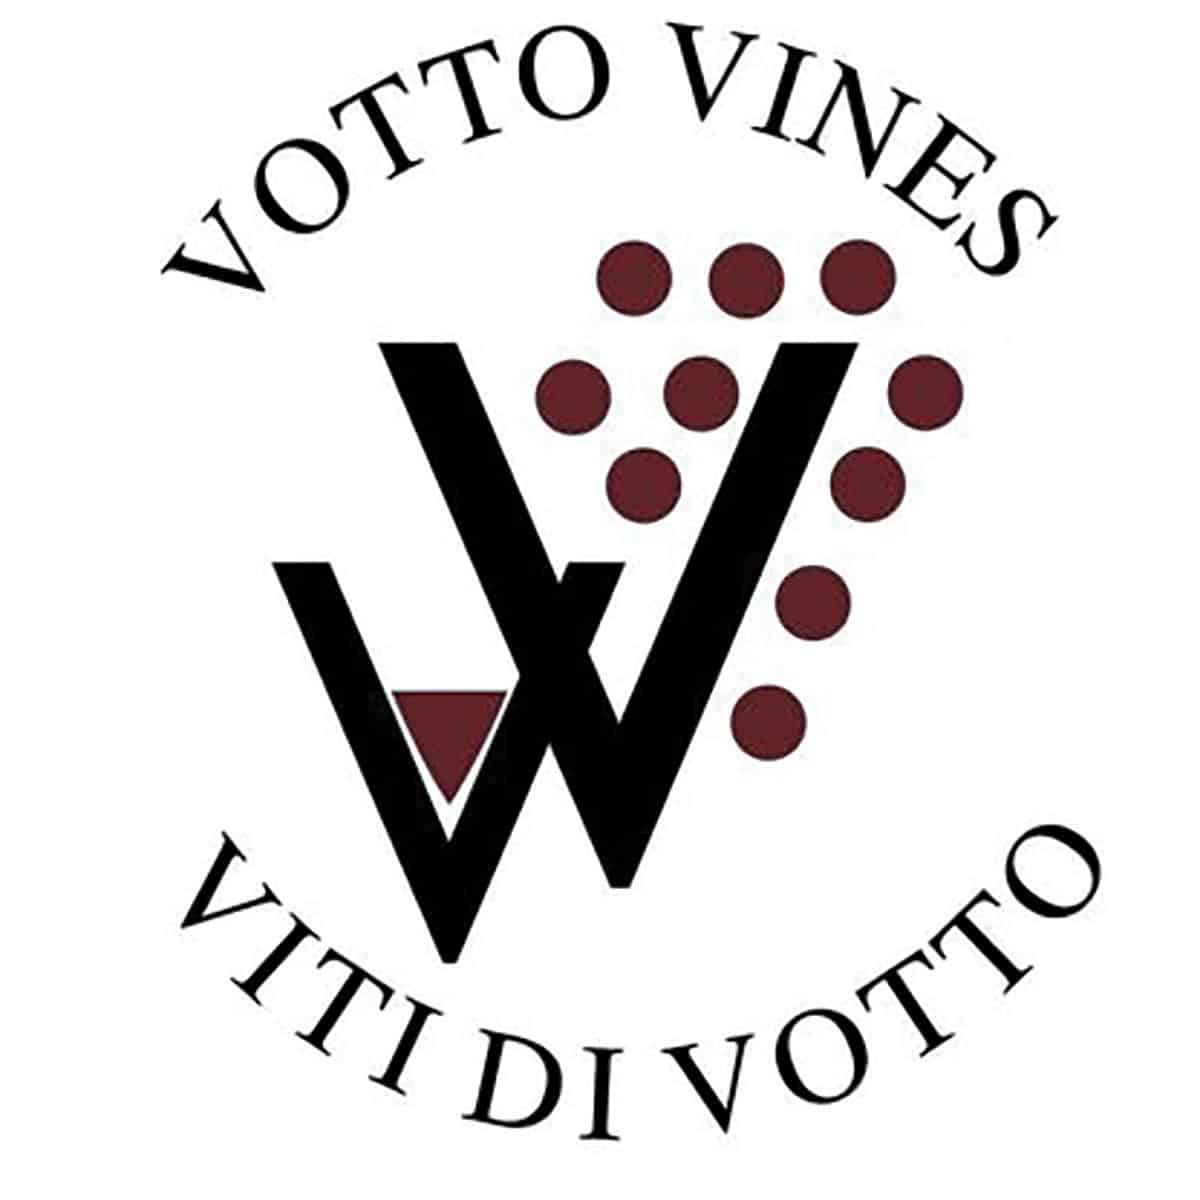 Votto Vines